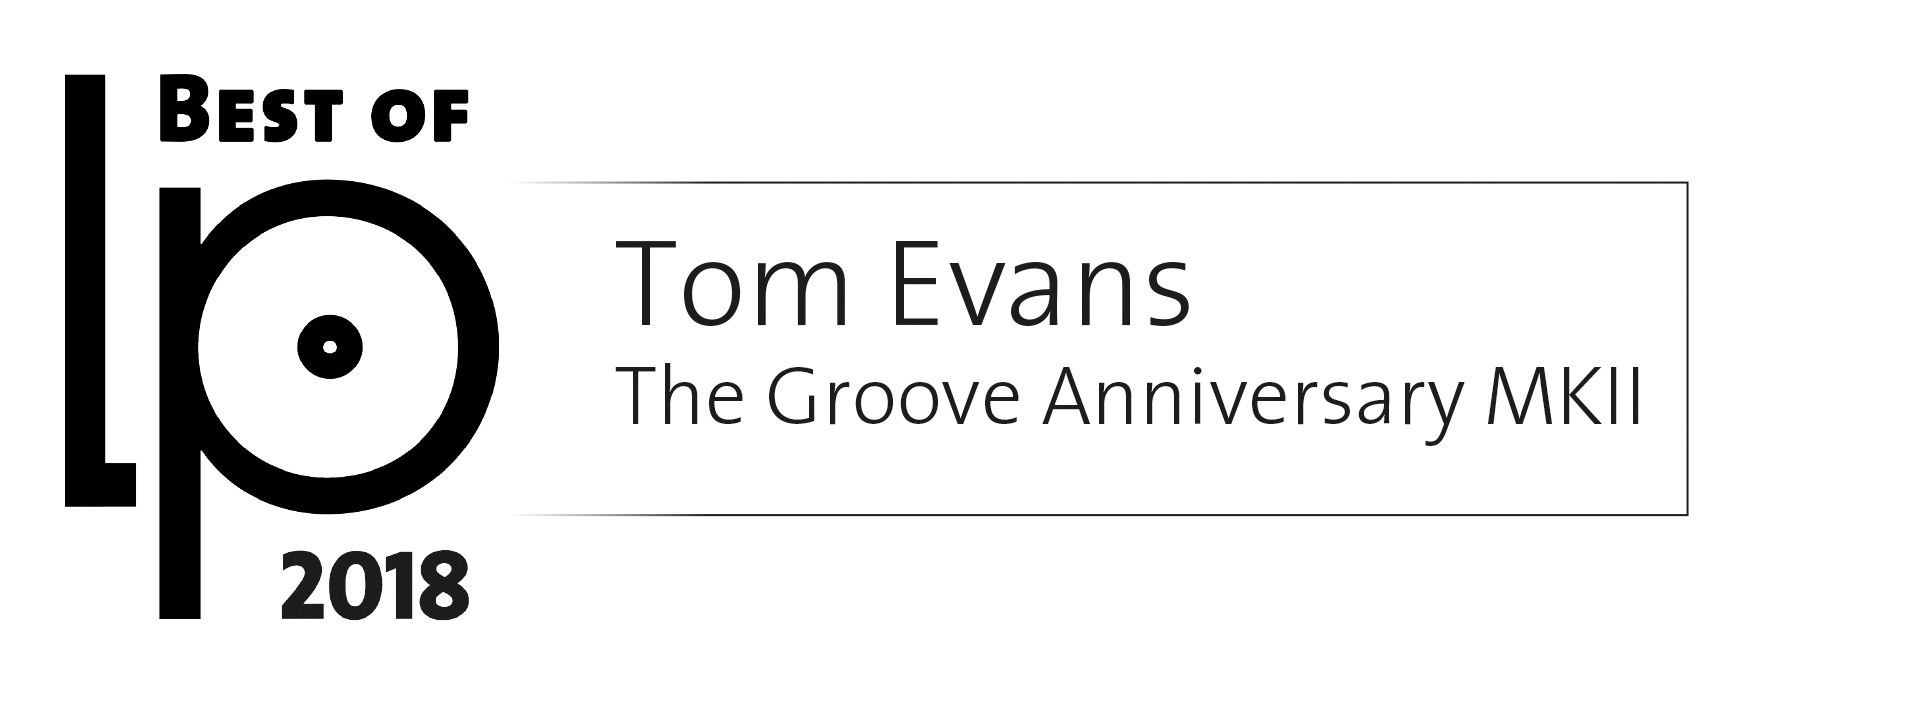 BEST OF LP 2018, TOM EVANS THE GROOVE ANNIVERSARY MK 2 BEST OF LP 2018